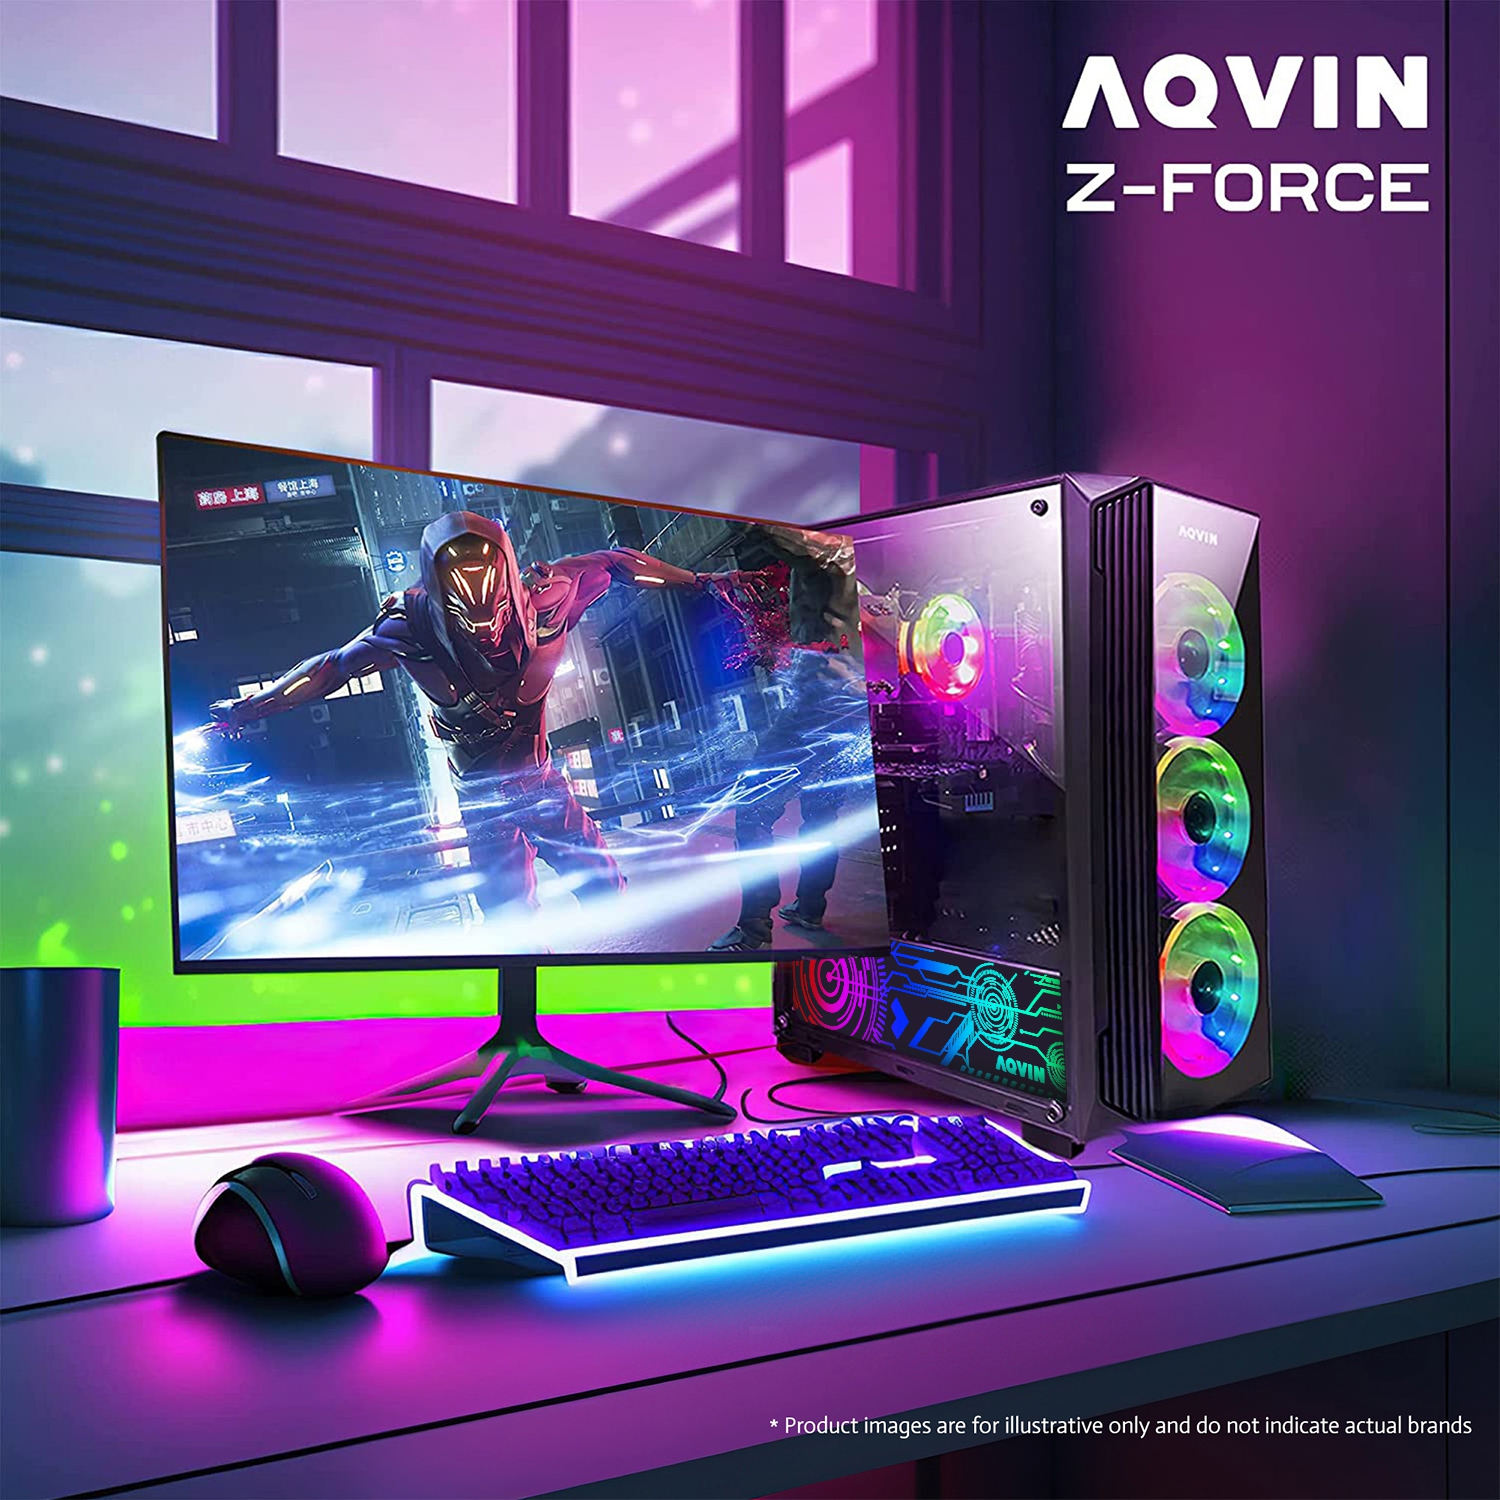 Refurbished(Excellent) AQVIN Gaming PC Desktop Computer Tower